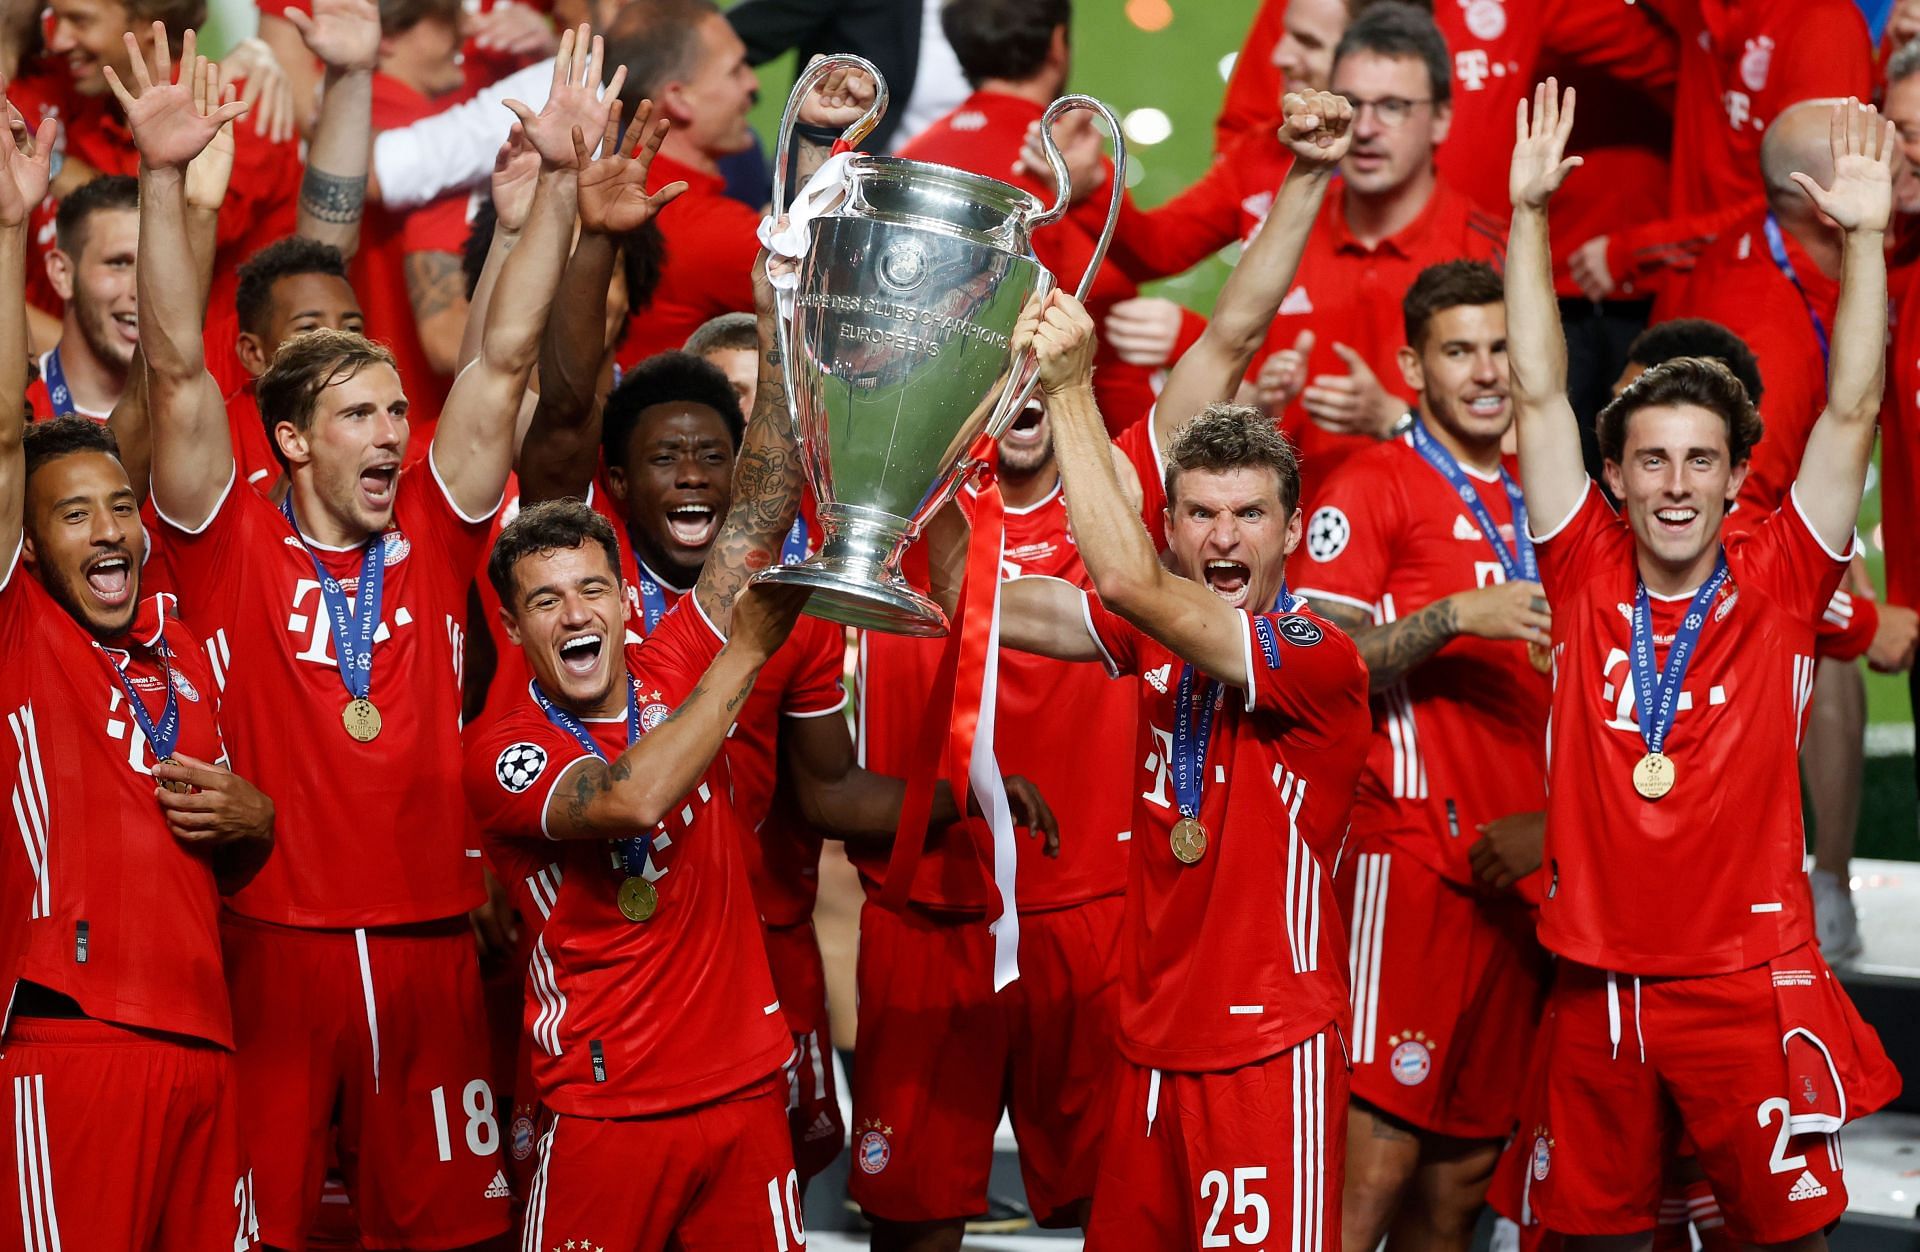 Bayern Munich cruised to European glory in 2020.